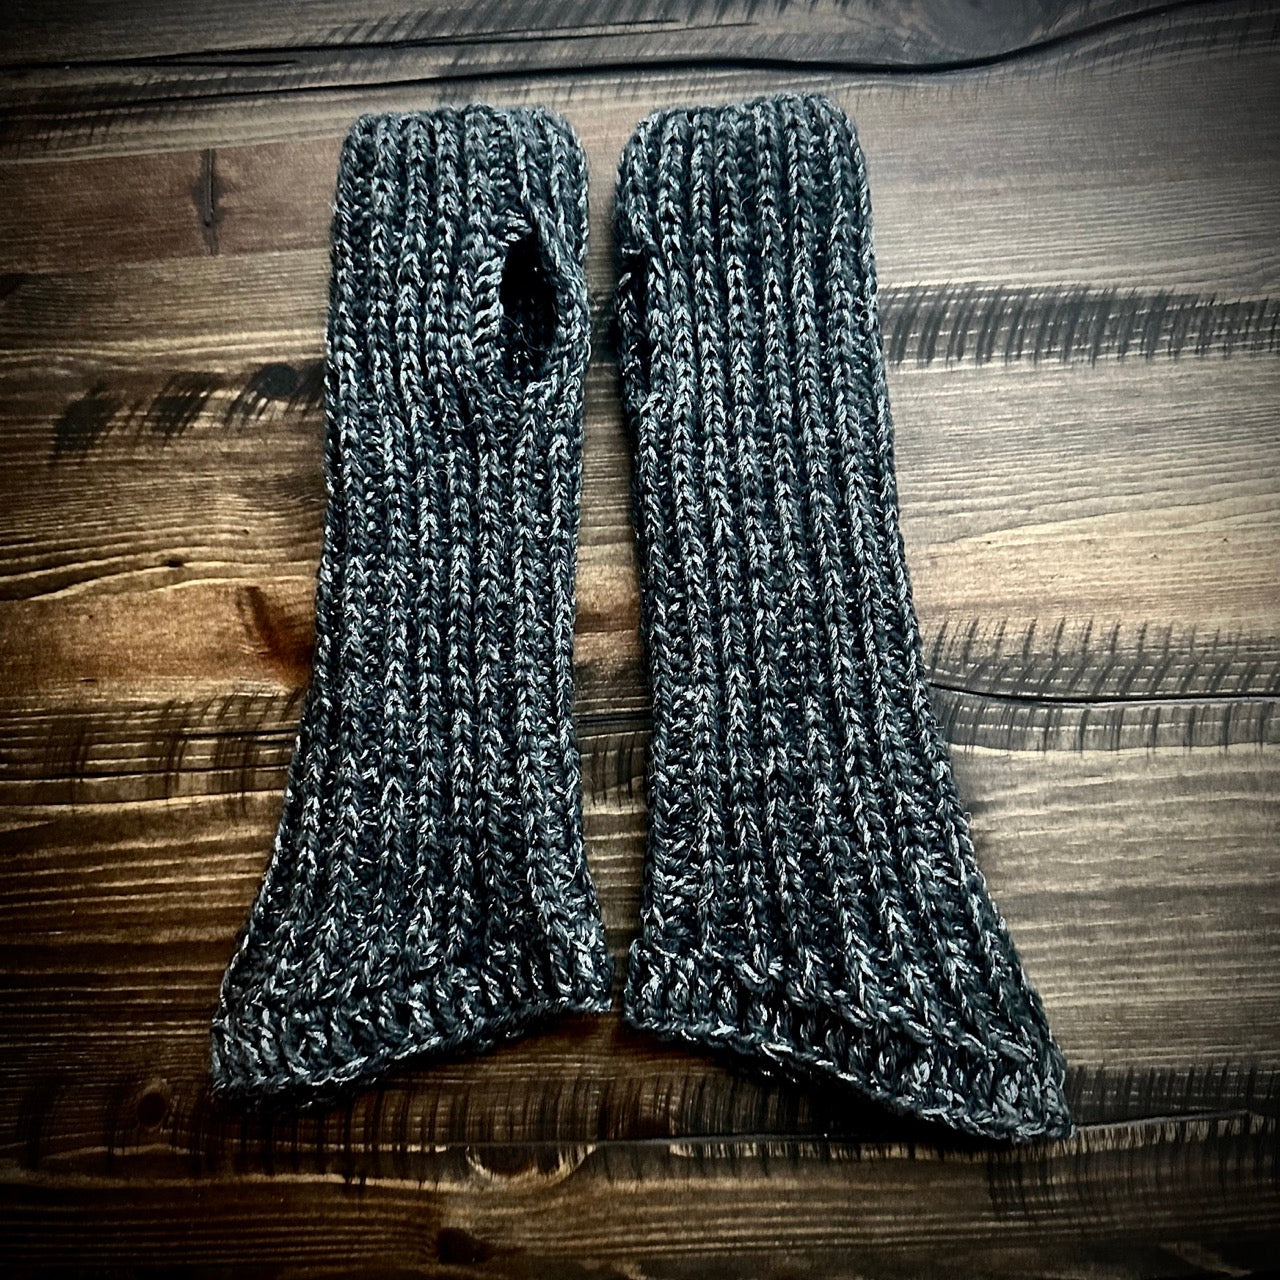 Handmade knitted glowing grey arm warmers